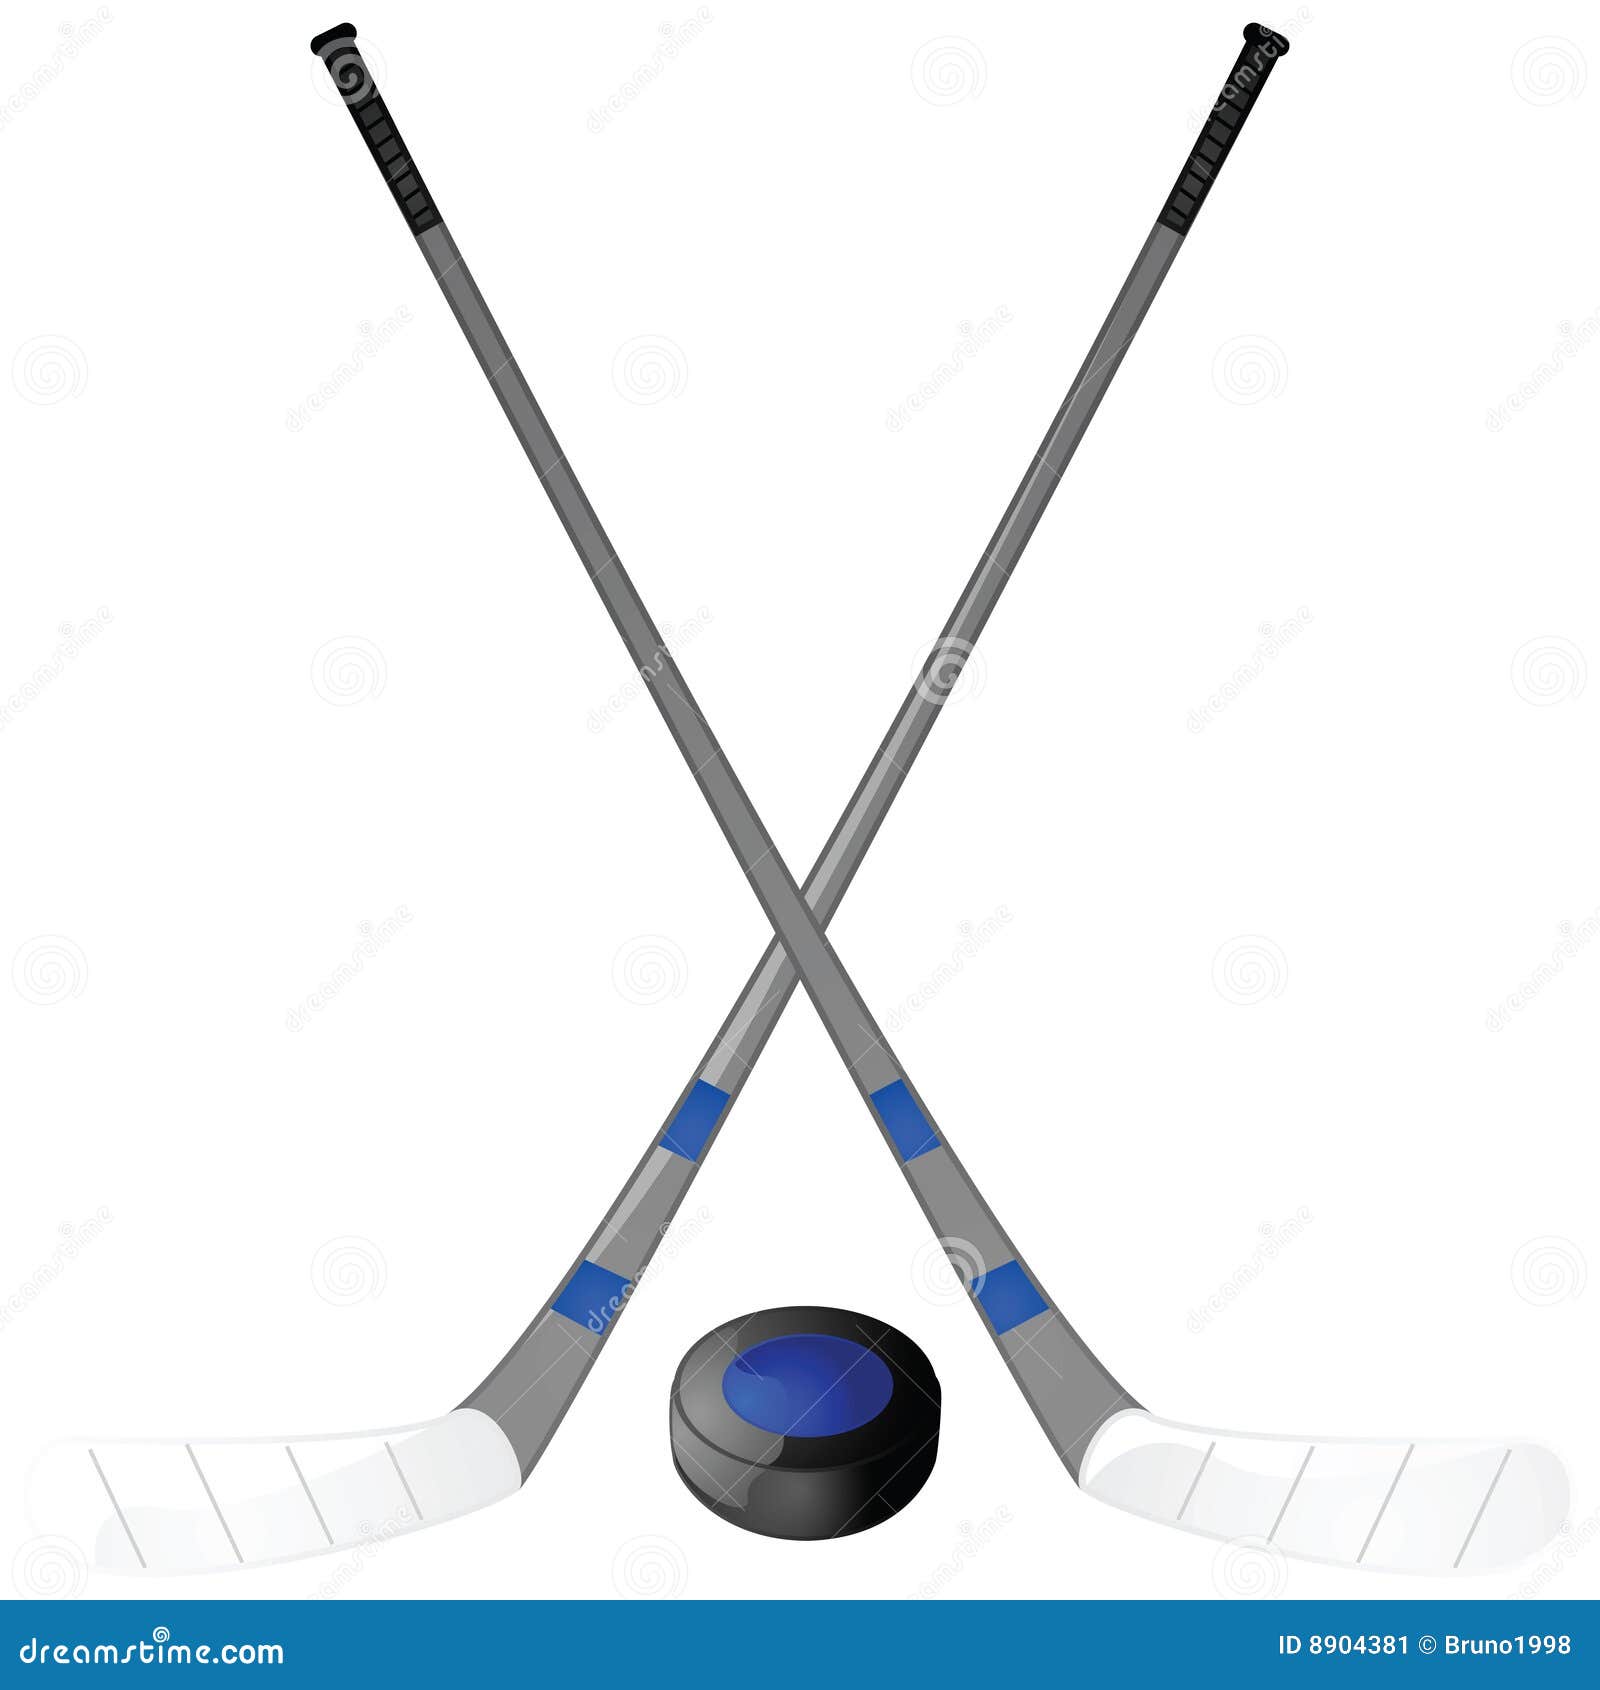 GRAPHICS & MORE Batman Classic Bat Shield Logo Ice Hockey Puck